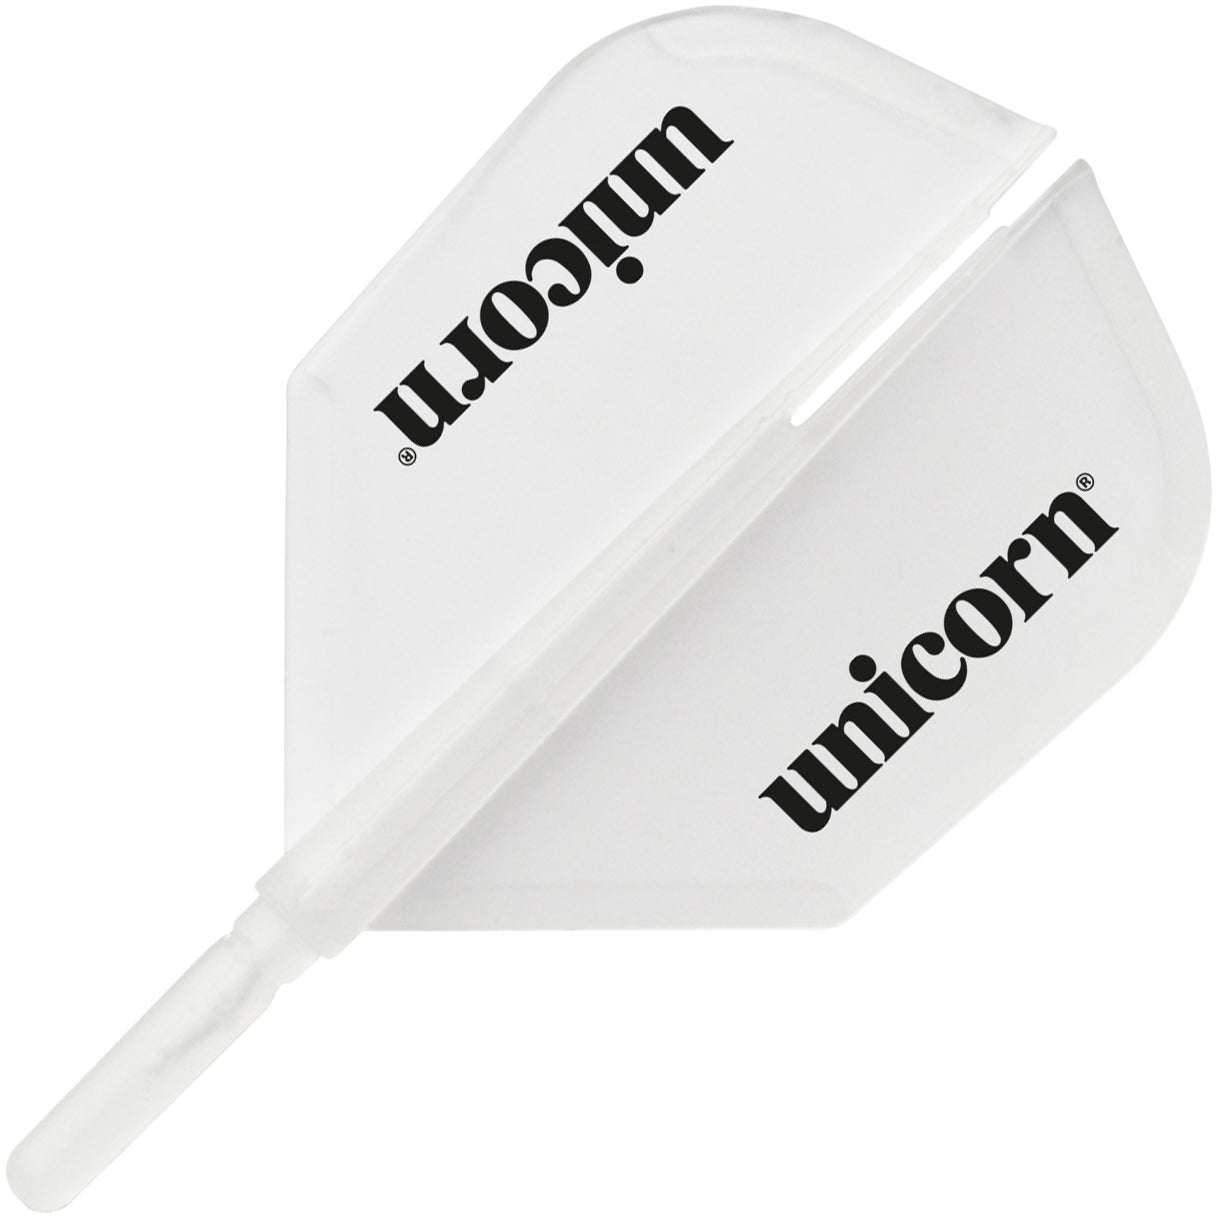 Unicorn X-Flight Shape Dart Flight Body - Clear White